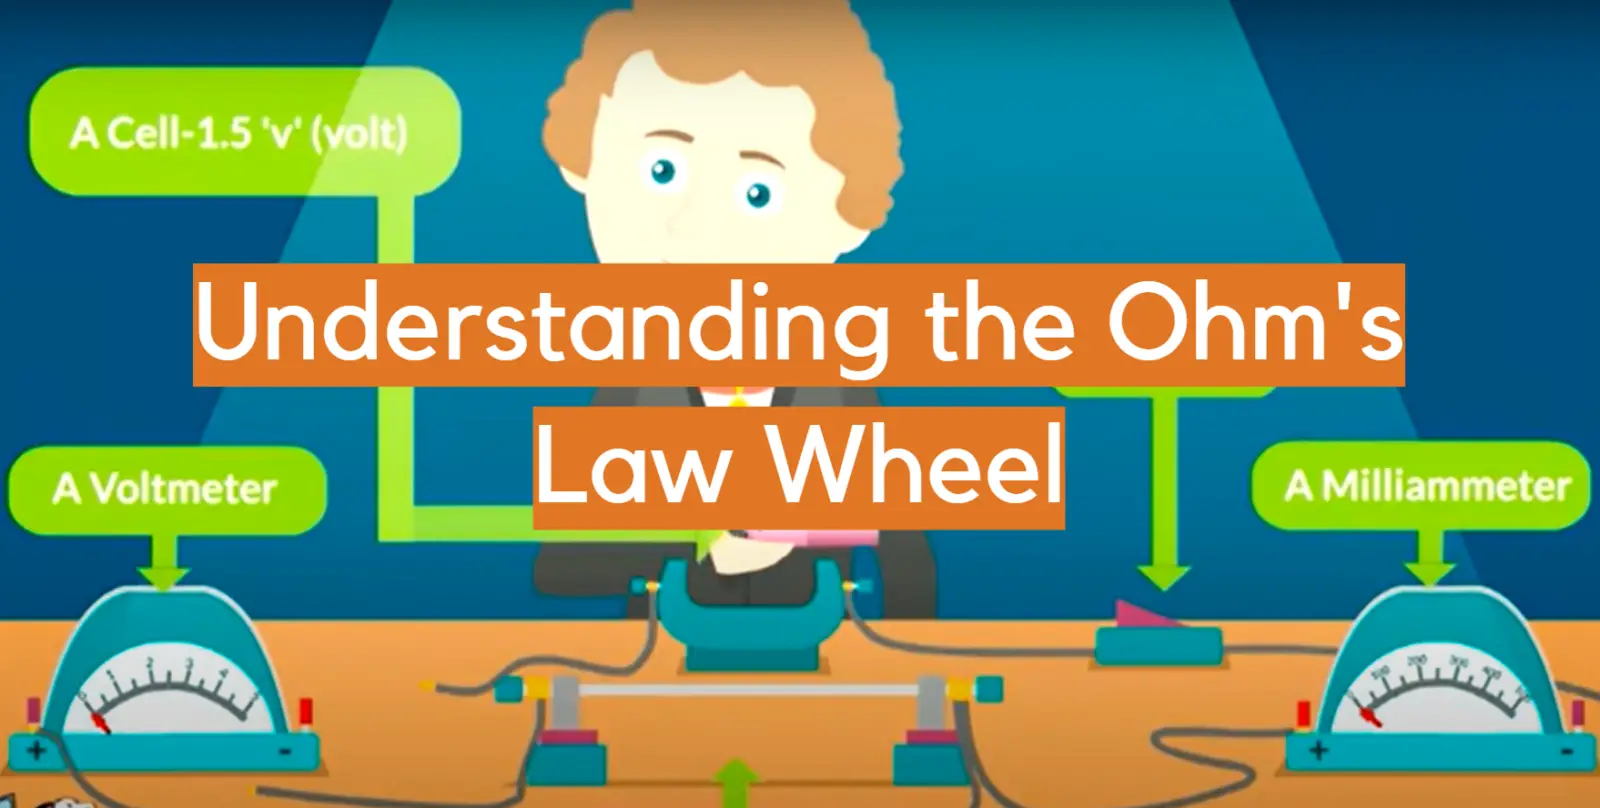 Understanding the Ohm's Law Wheel